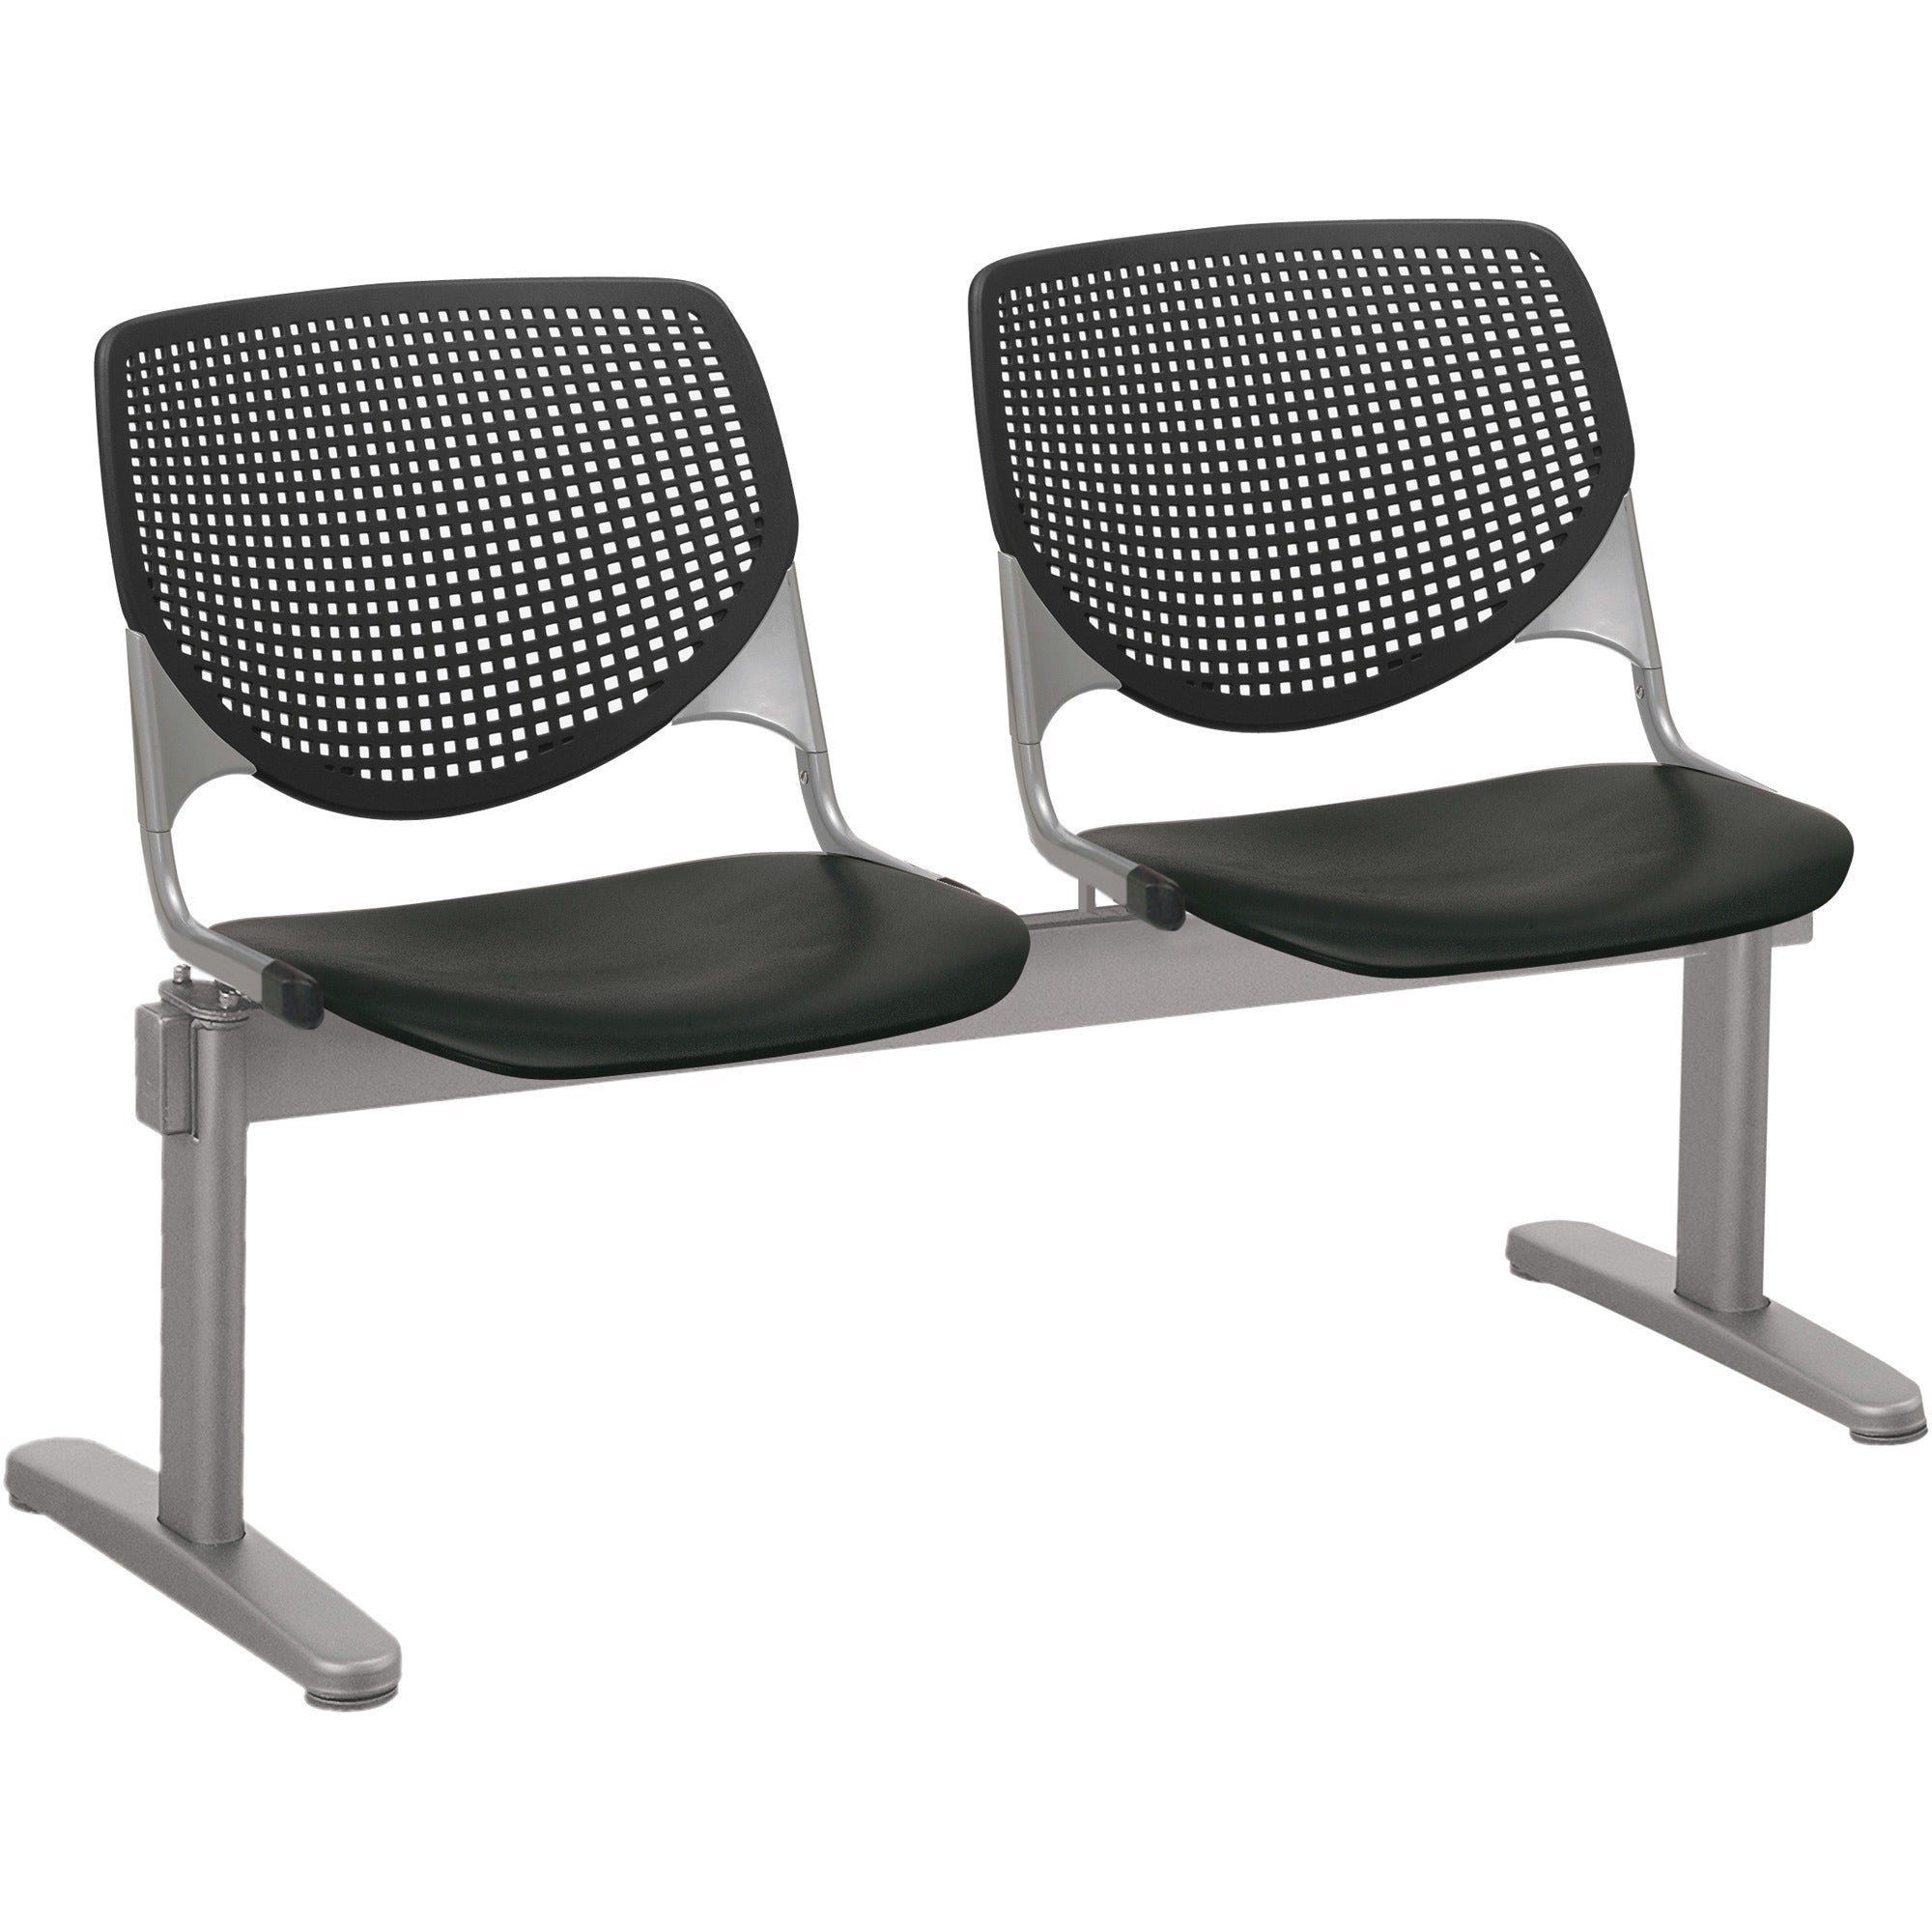 kfi-kool-2-seat-beam-chair-black-polypropylene-seat-black-polypropylene-aluminum-alloy-back-powder-coated-silver-tubular-steel-frame-1-each_kfi2300beam2p10 - 1